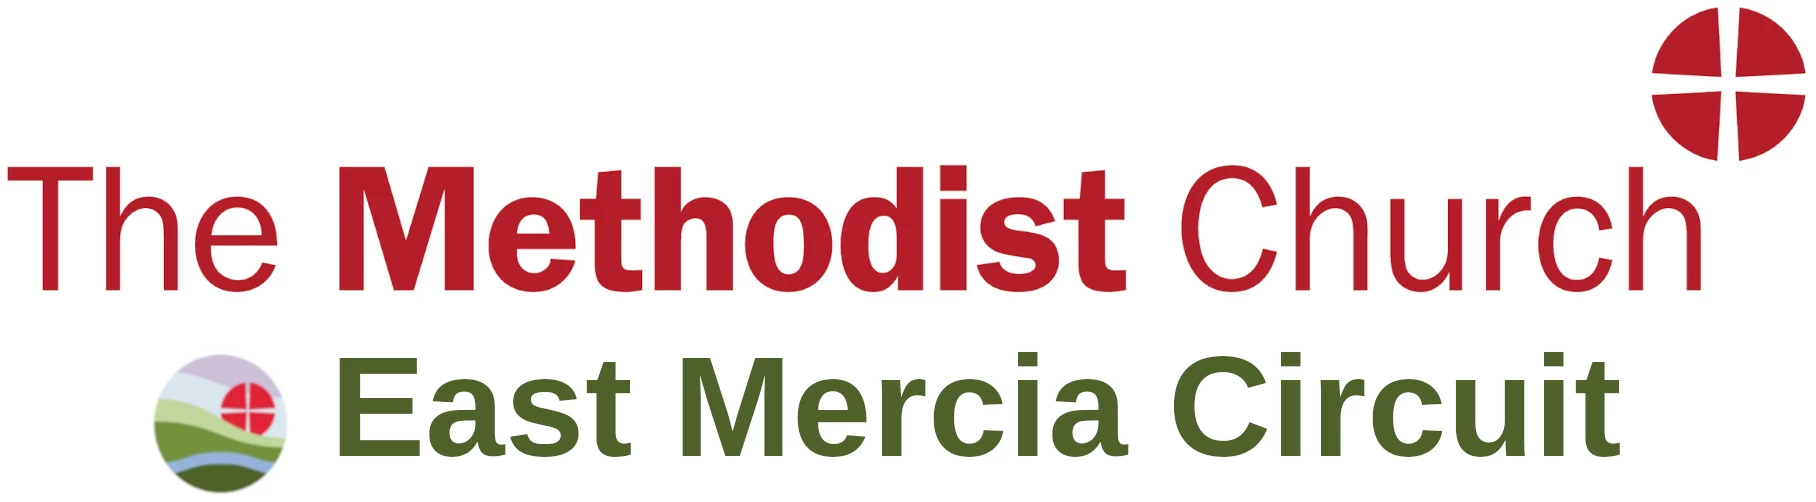 East Mercia Methodist Circuit Logo Link